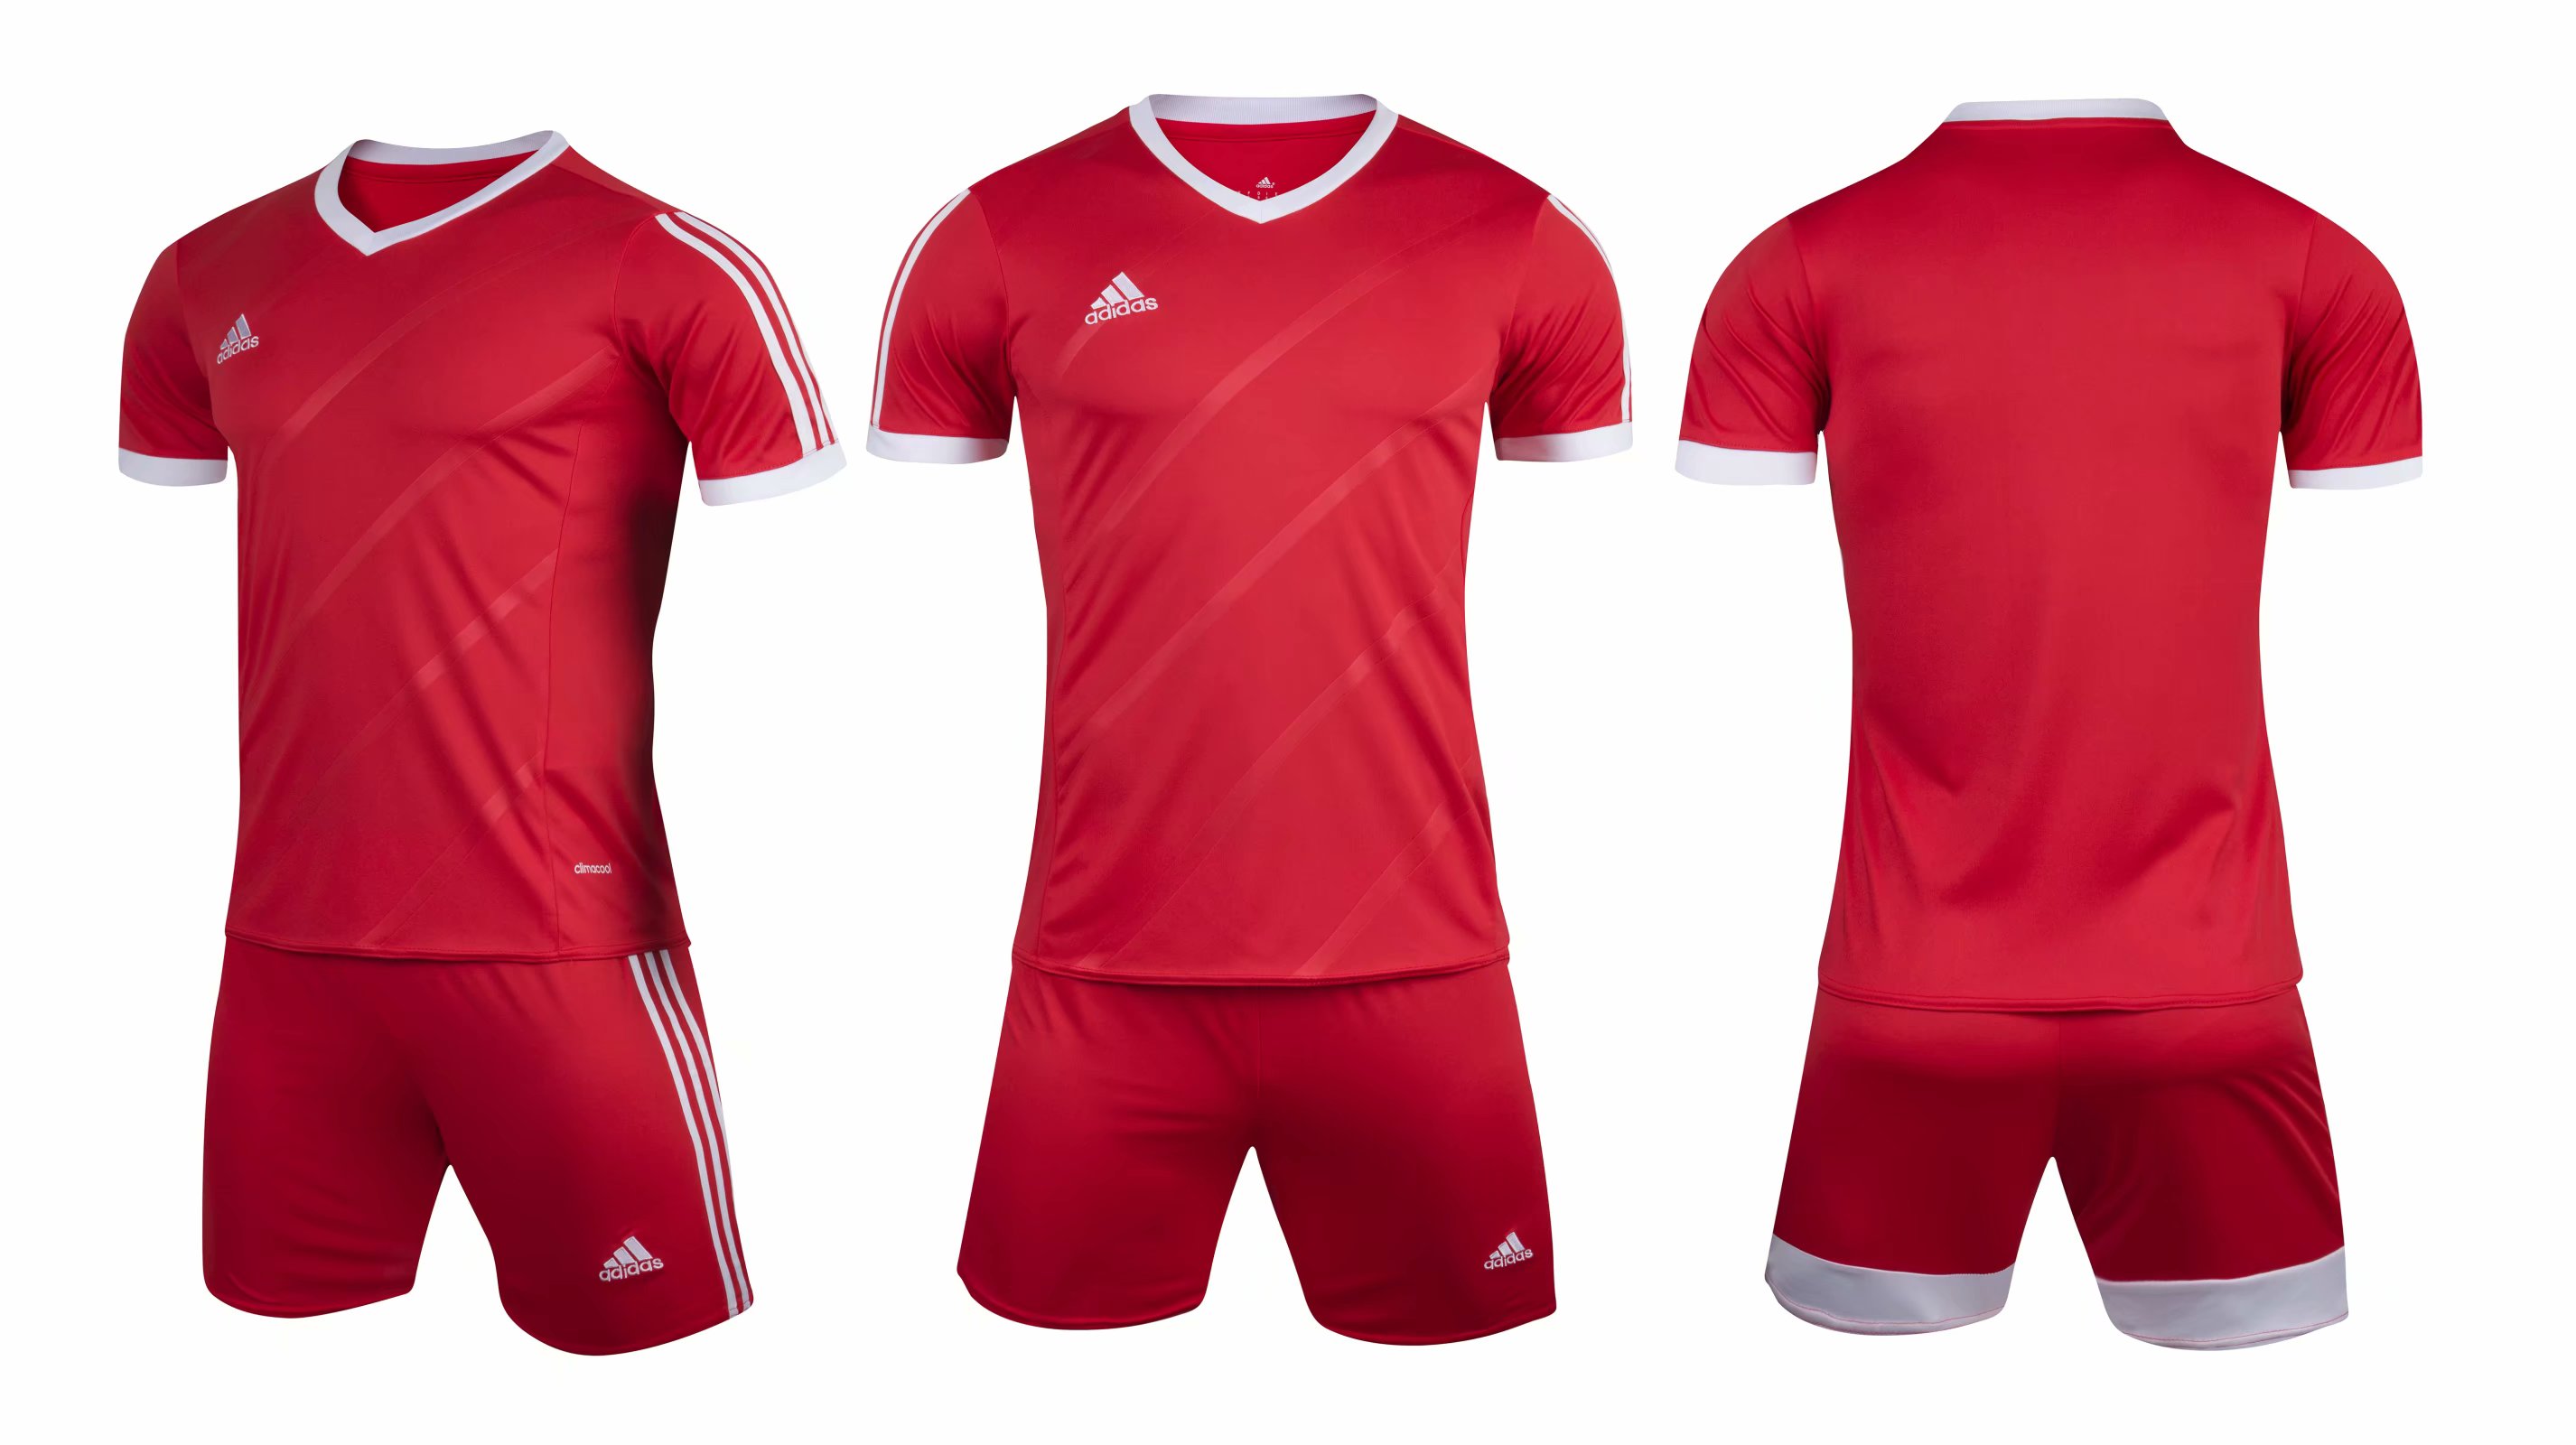 Adidas Soccer Team Uniforms 031